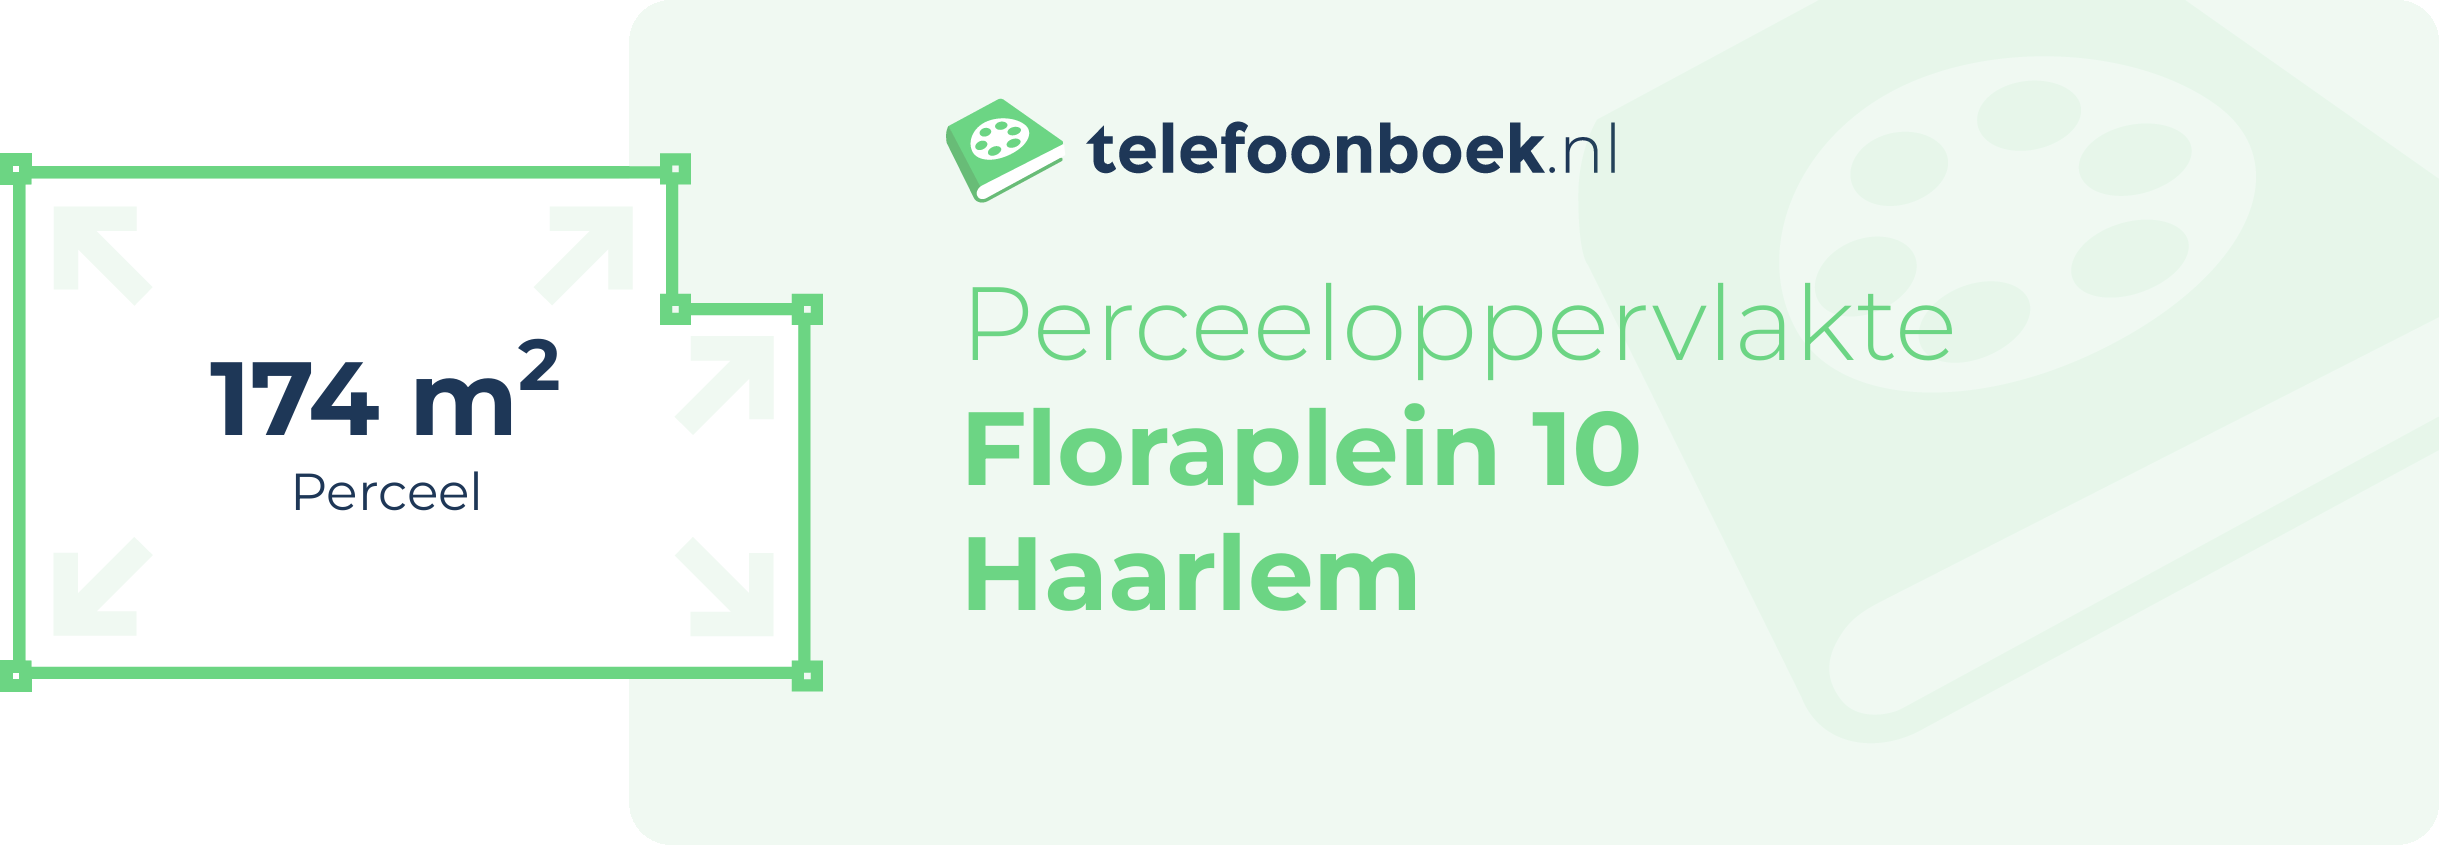 Perceeloppervlakte Floraplein 10 Haarlem